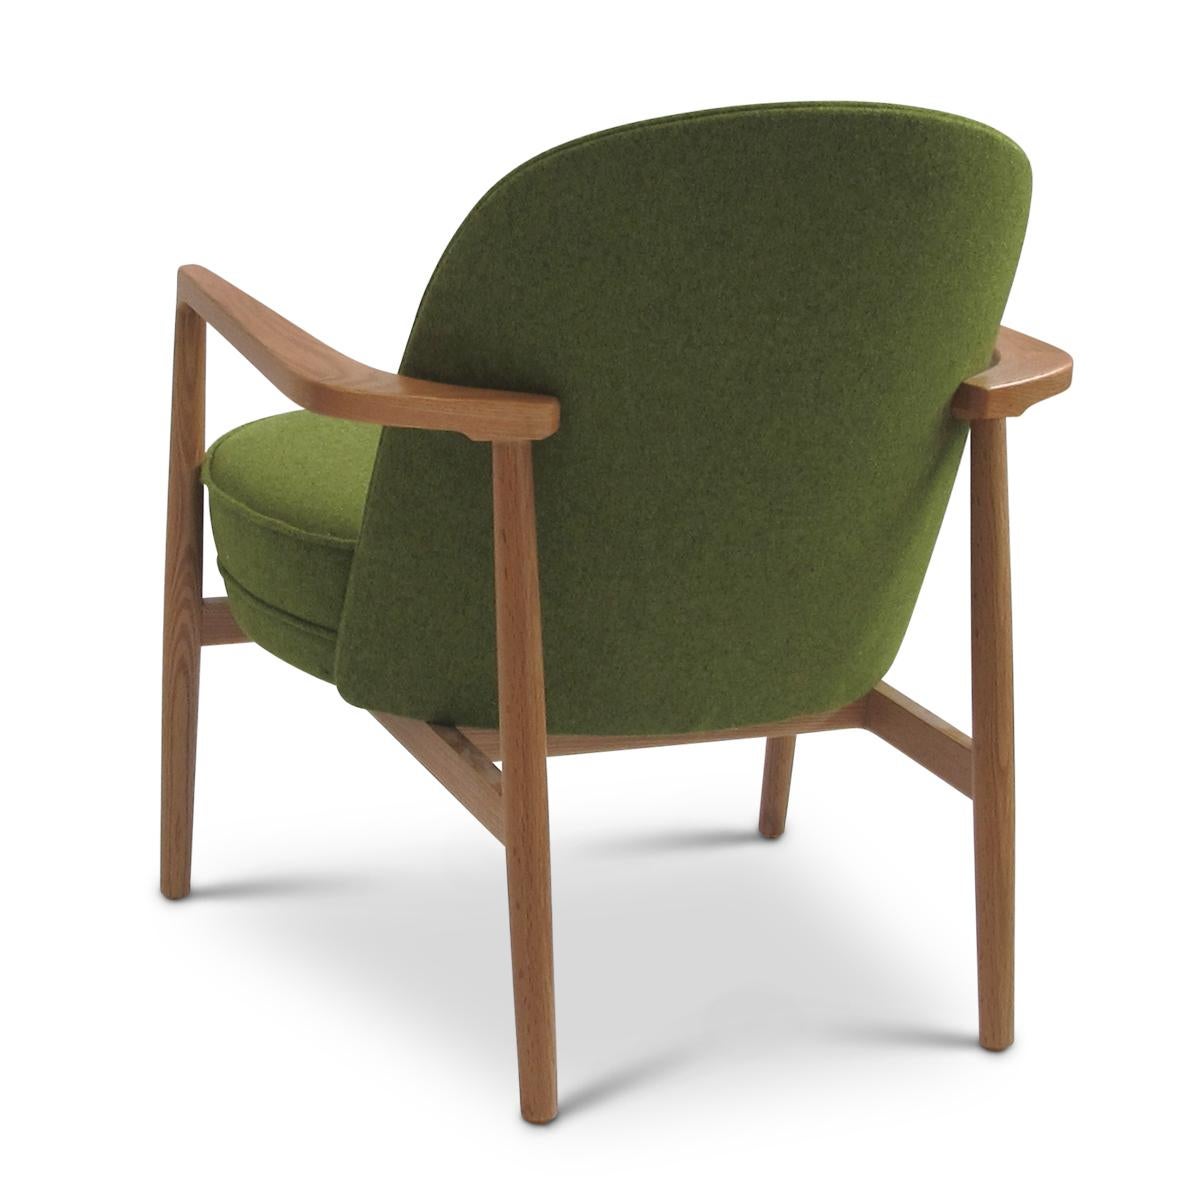 Niels Gammelgaard - Round chair

Beautiful, minimal design lounge chair, model 'Round', produced by Woodmark Arne Christiansen. 
Oak frame, green mix blazer wool upholstery from Camera.